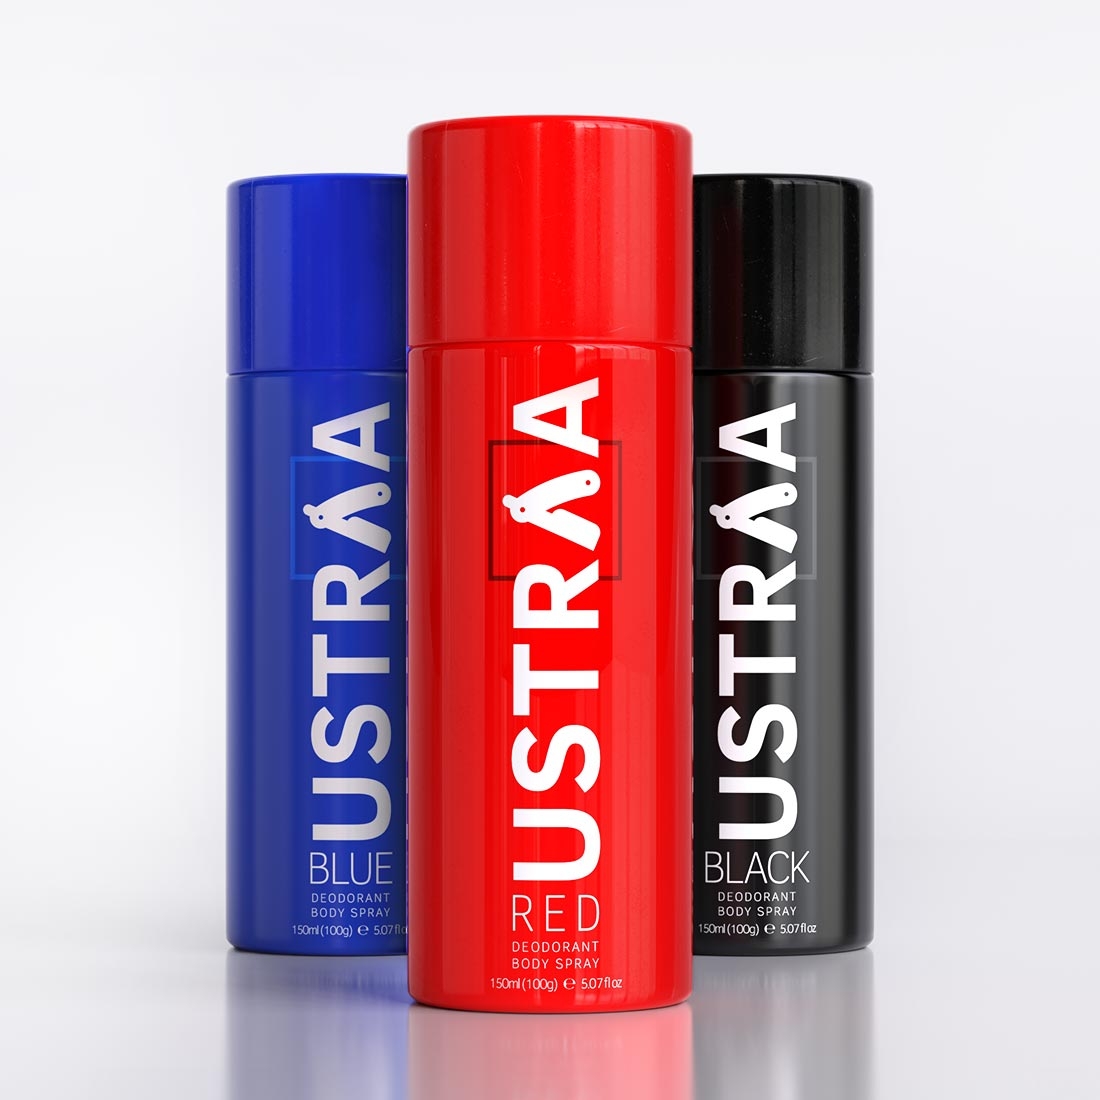 Ustraa | Ustraa Deodorant Body Spray - 150 ml - RED, BLACK, BLUE - Set of 3